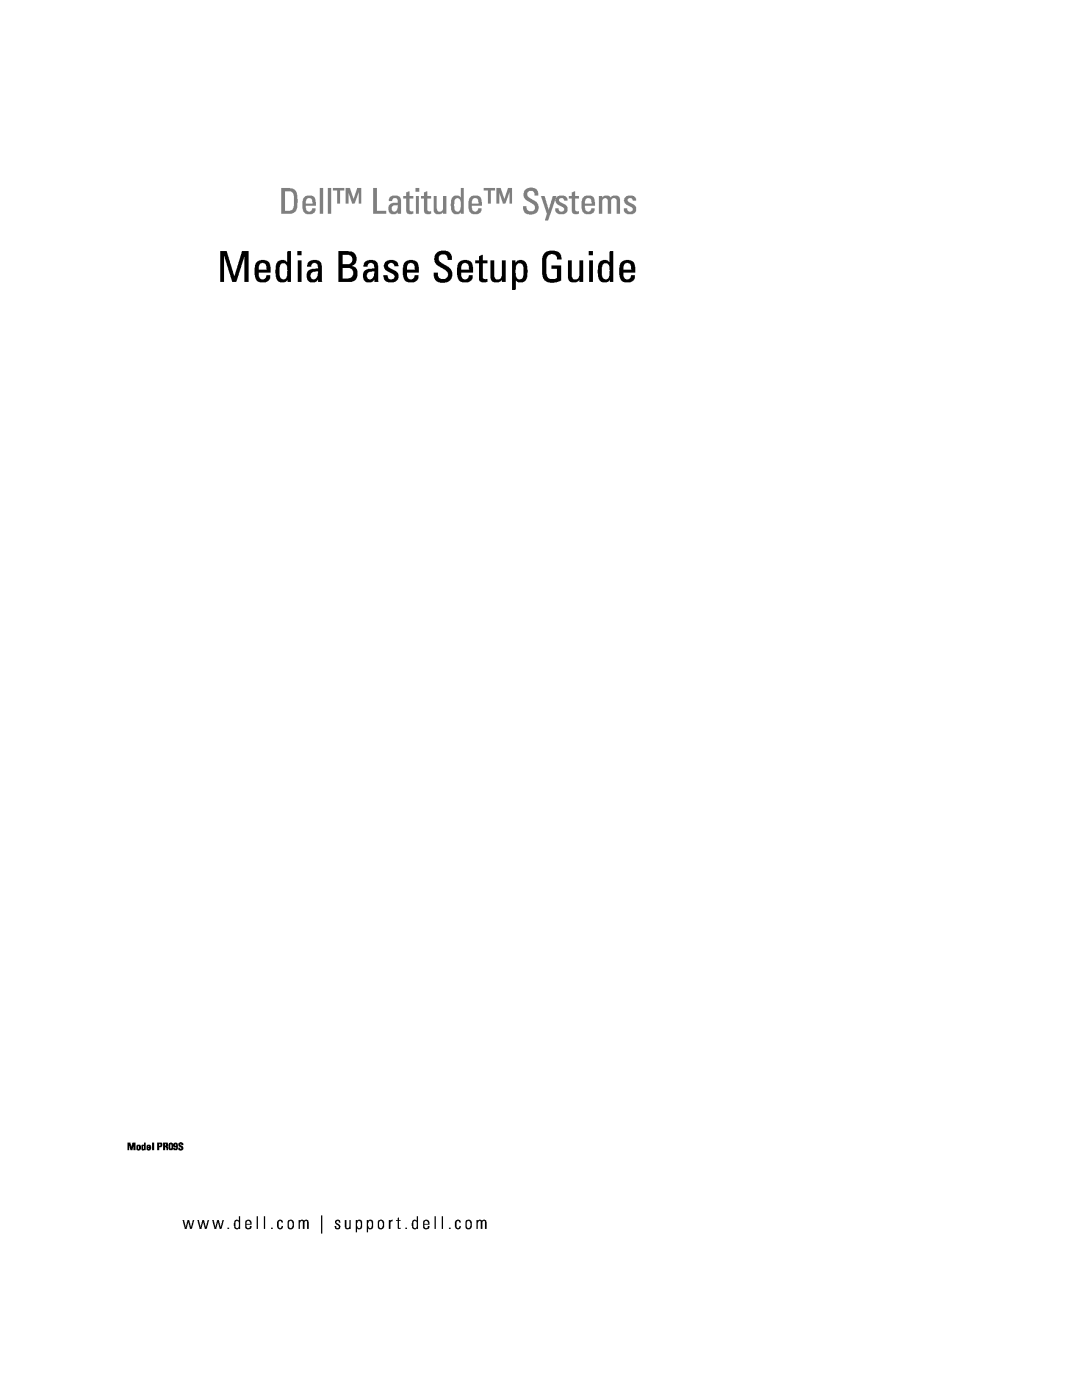 Dell Model PR09S setup guide Media Base Setup Guide, Dell Latitude Systems 